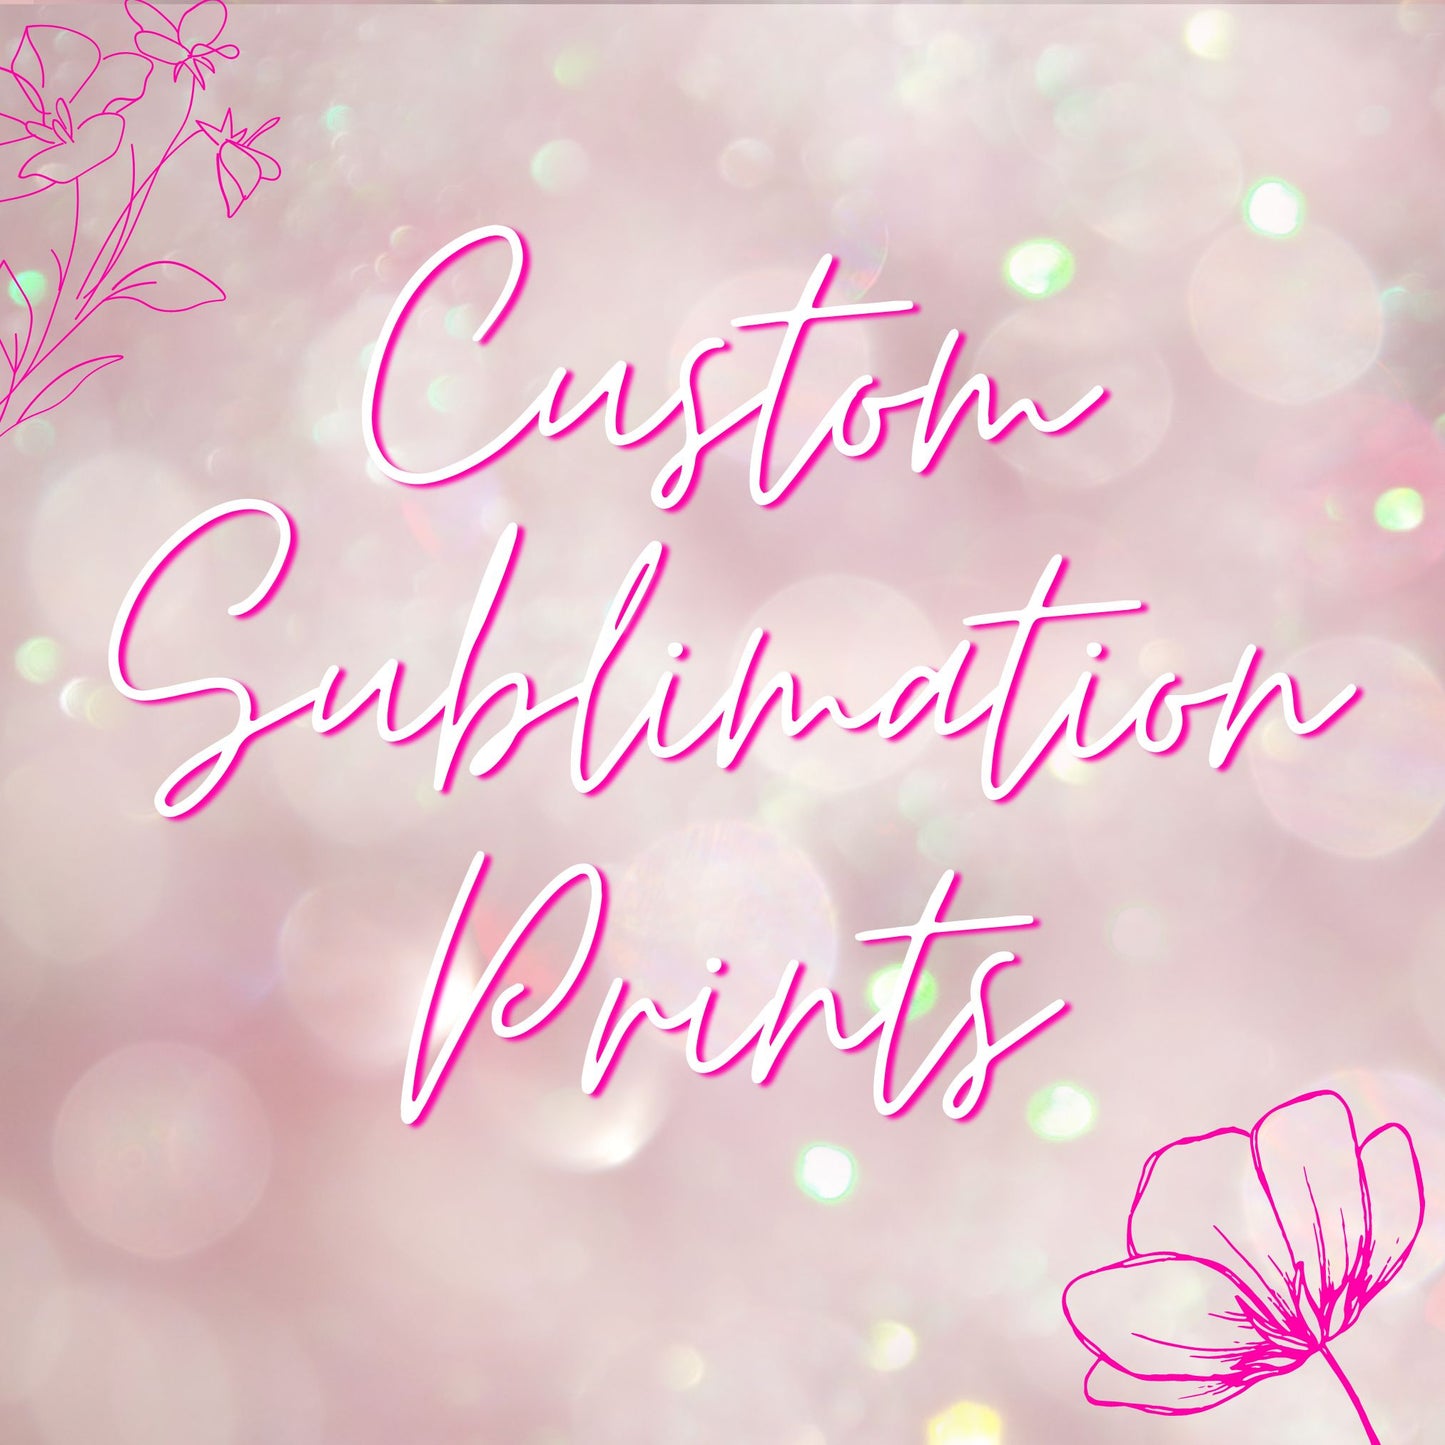 Custom Sublimation Prints